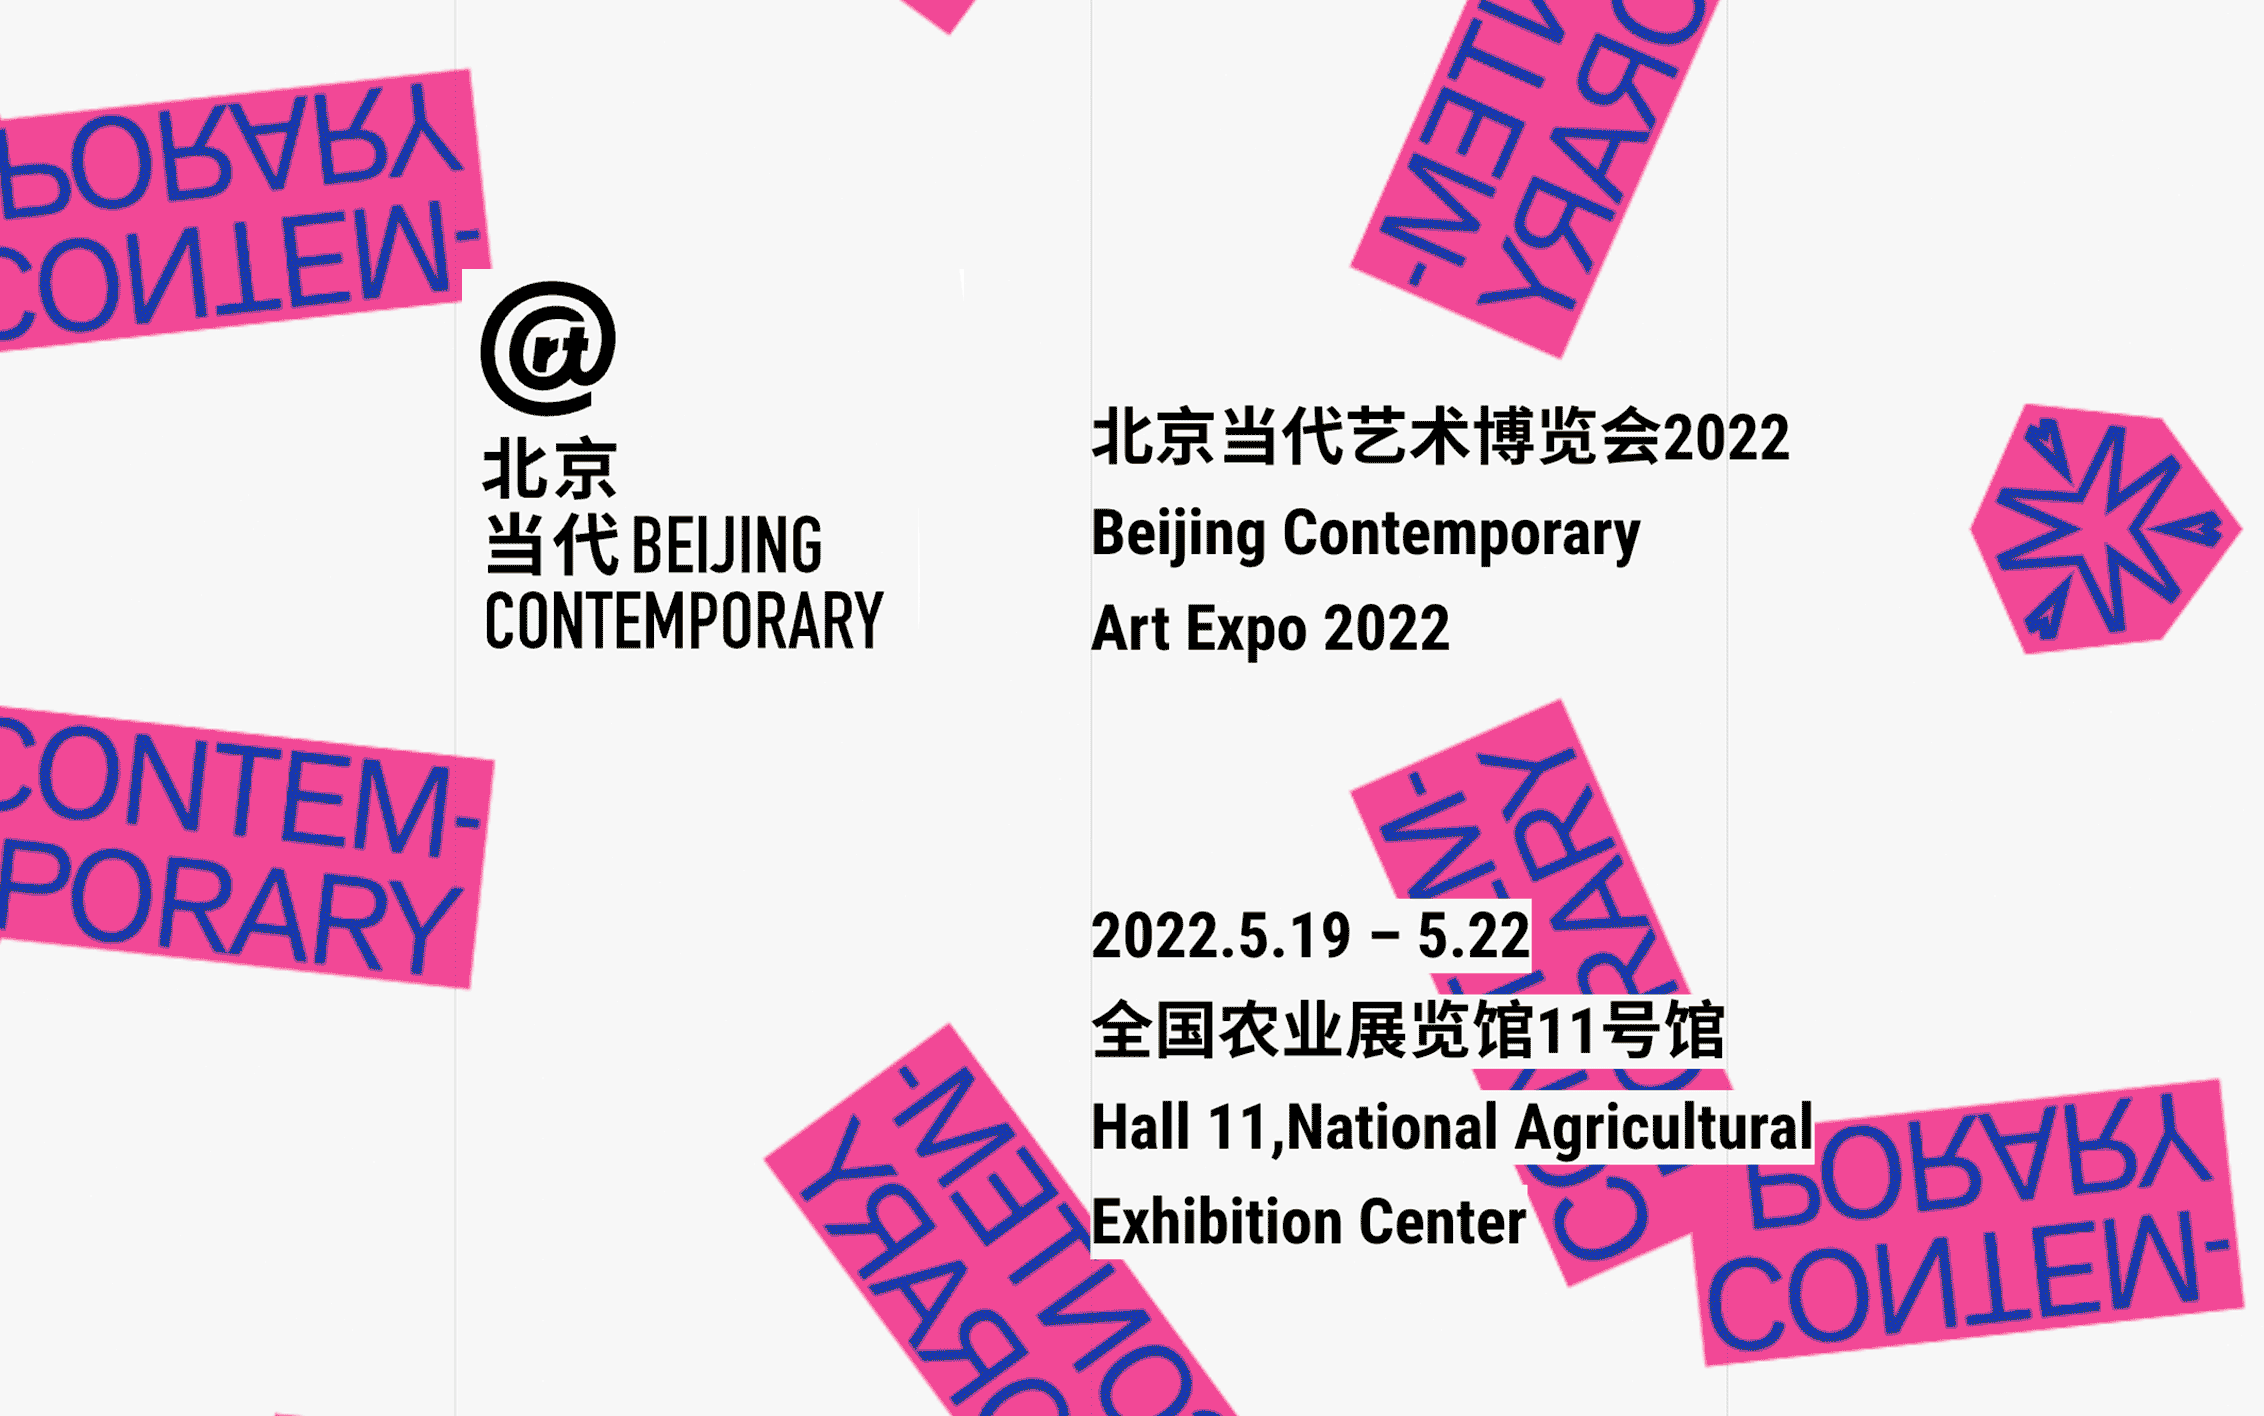 Contemporary art art fair, Beijing Contemporary Art Expo 2022 at Asia Art Center, Taipei, Taiwan